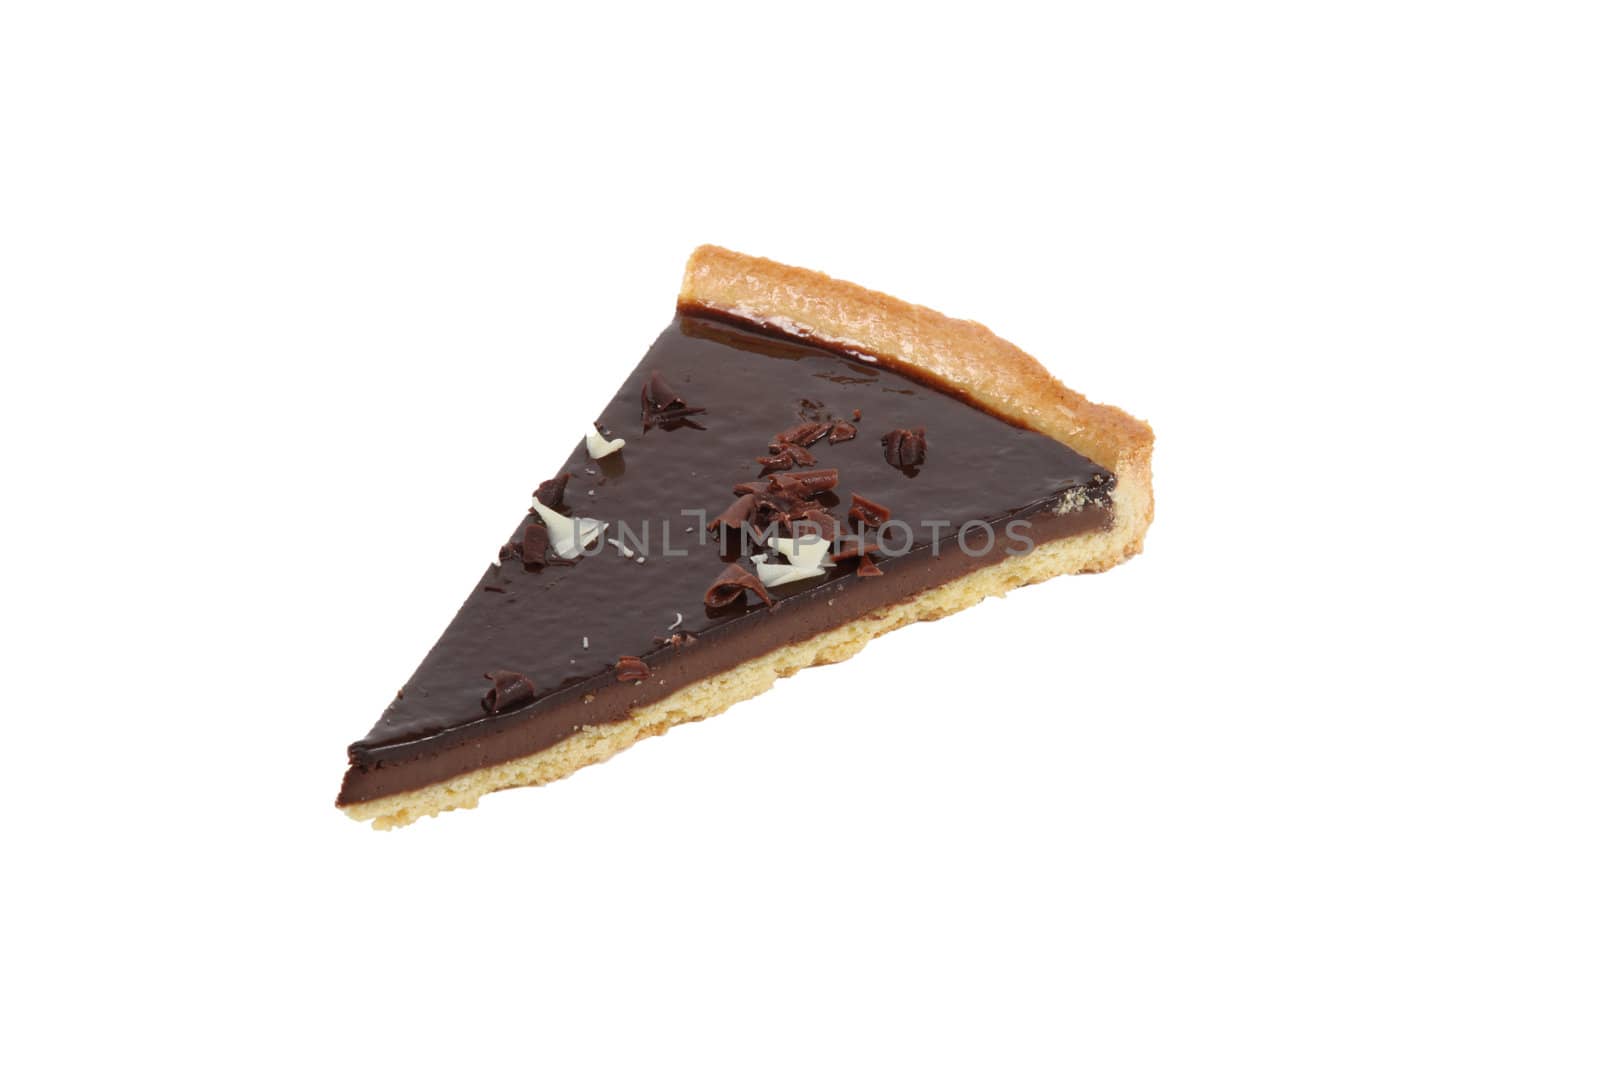 Slice of chocolate tart by phovoir